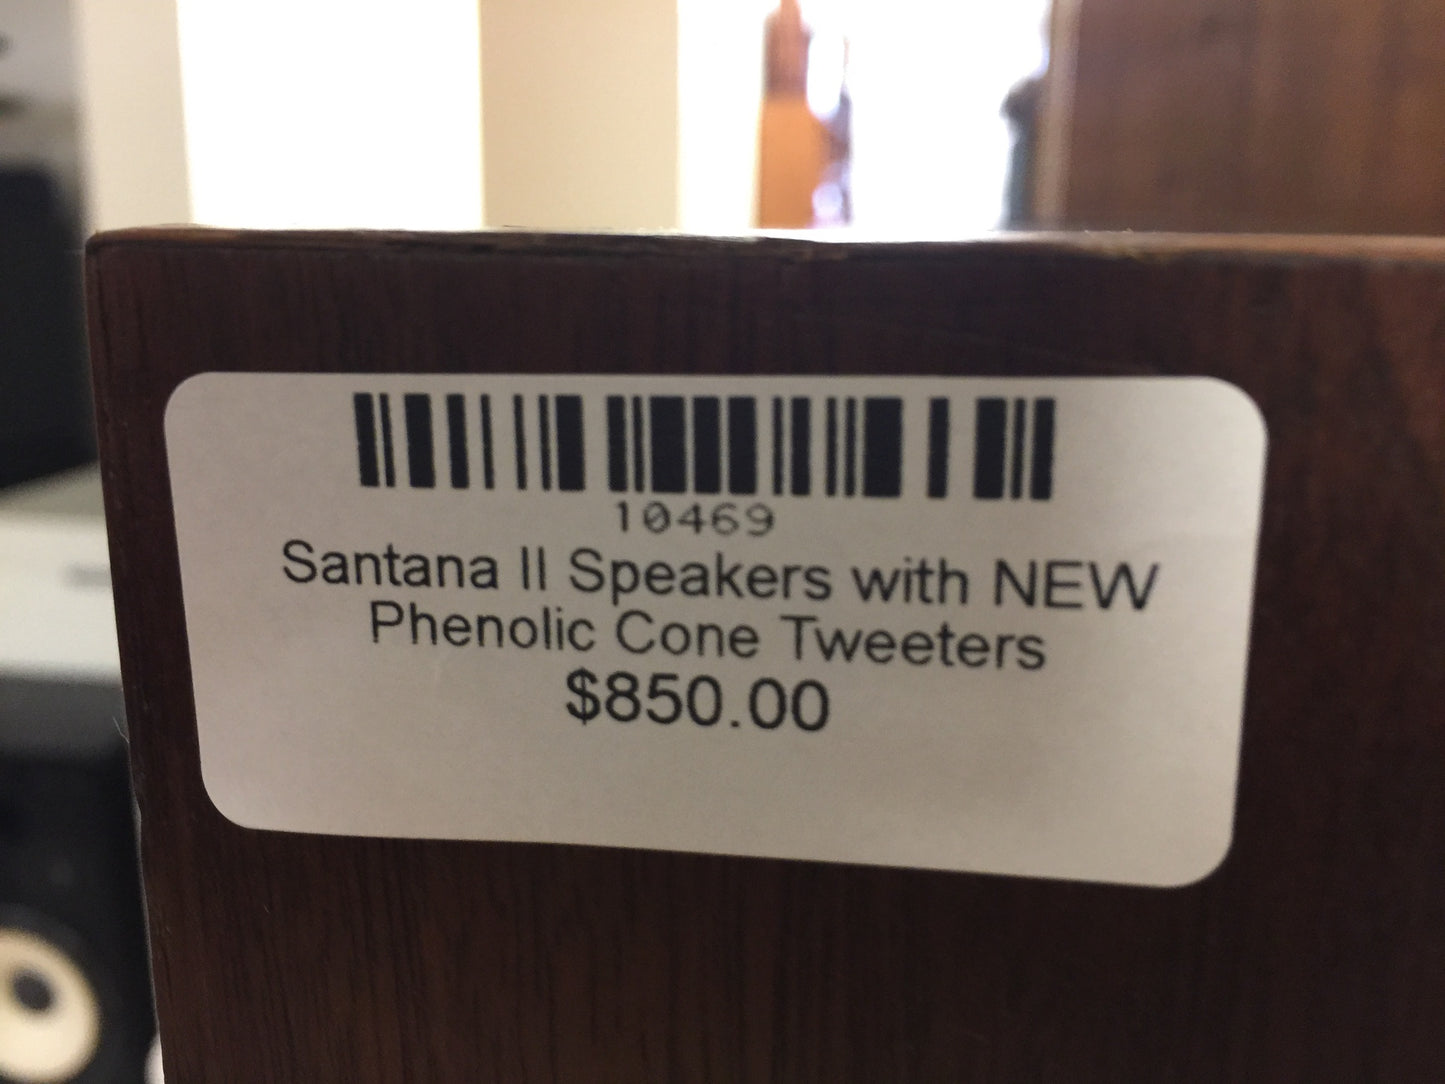 Santana II Speakers with NEW Phenolic Cone Tweeters